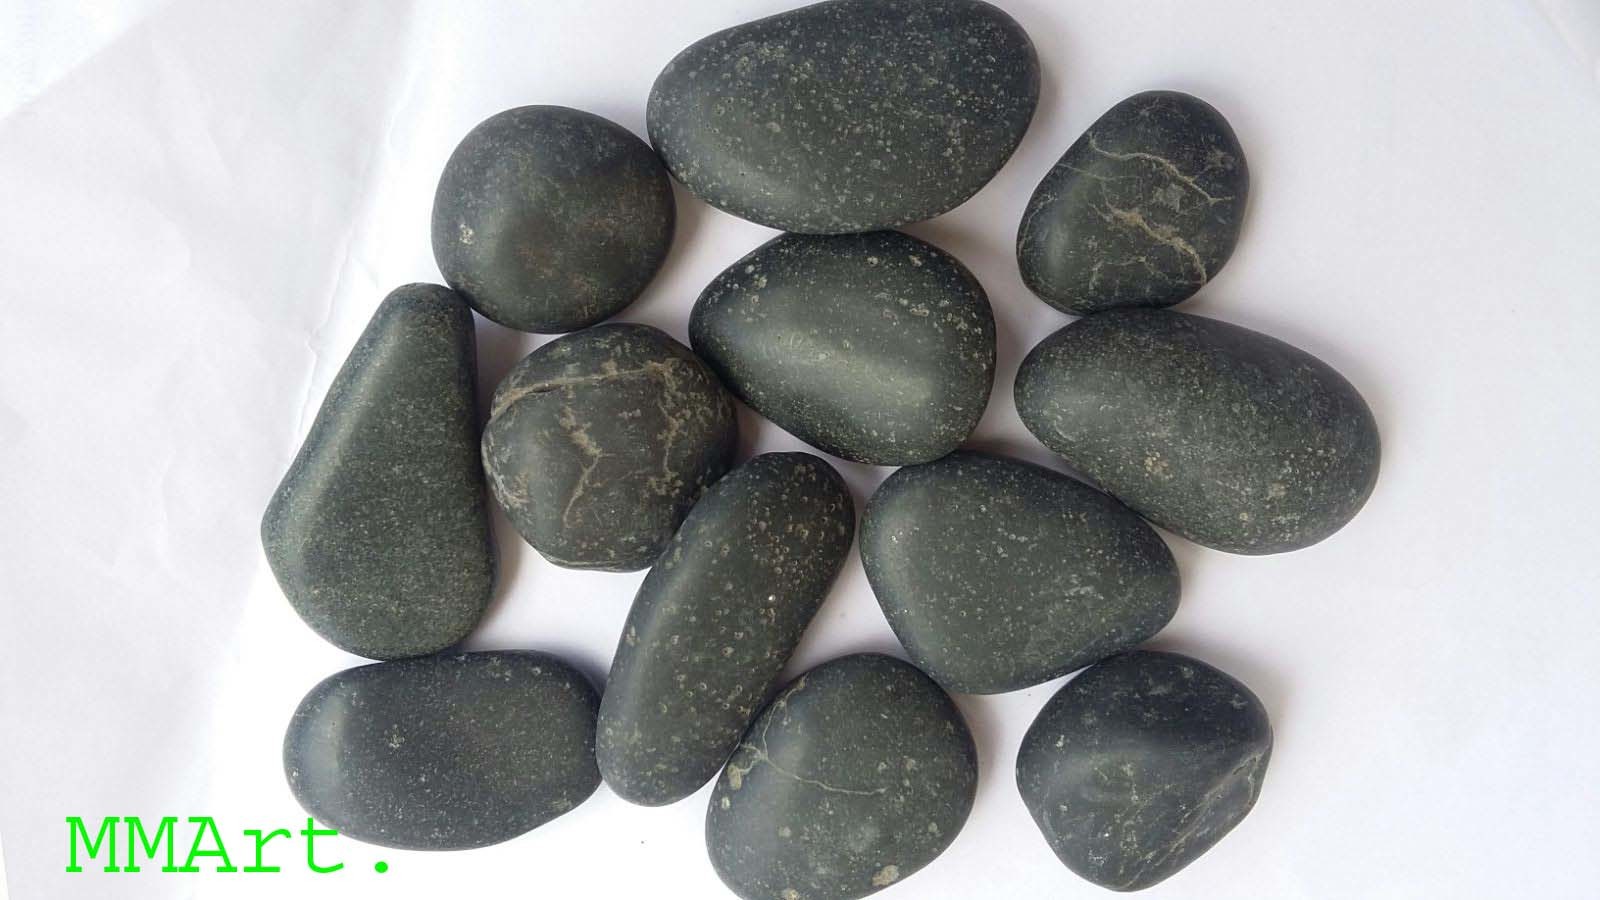 High hardness Black River Pebble Stone For gardening